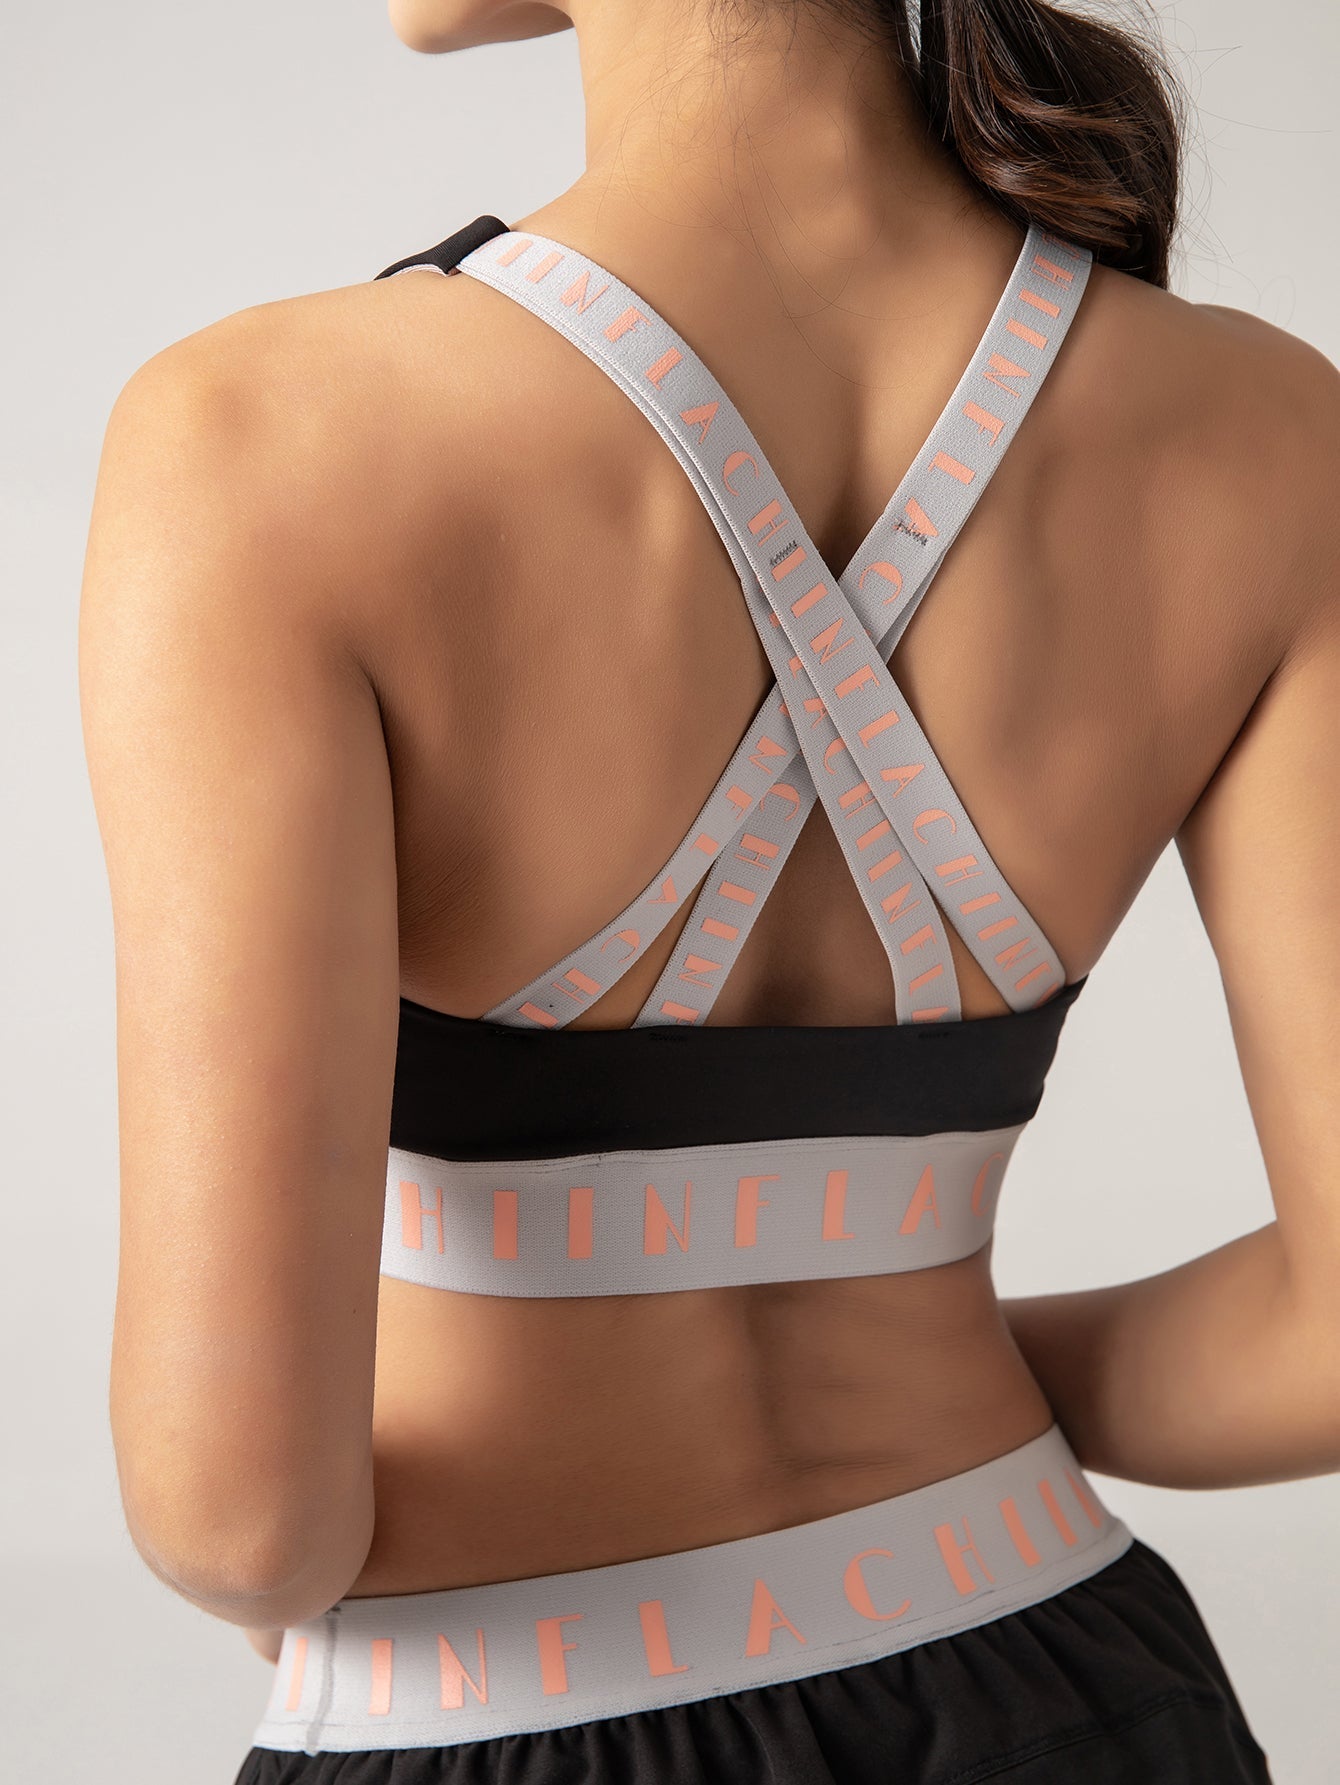 Sports Bra For Women, Criss-cross Back Padded Strappy Sports Bras